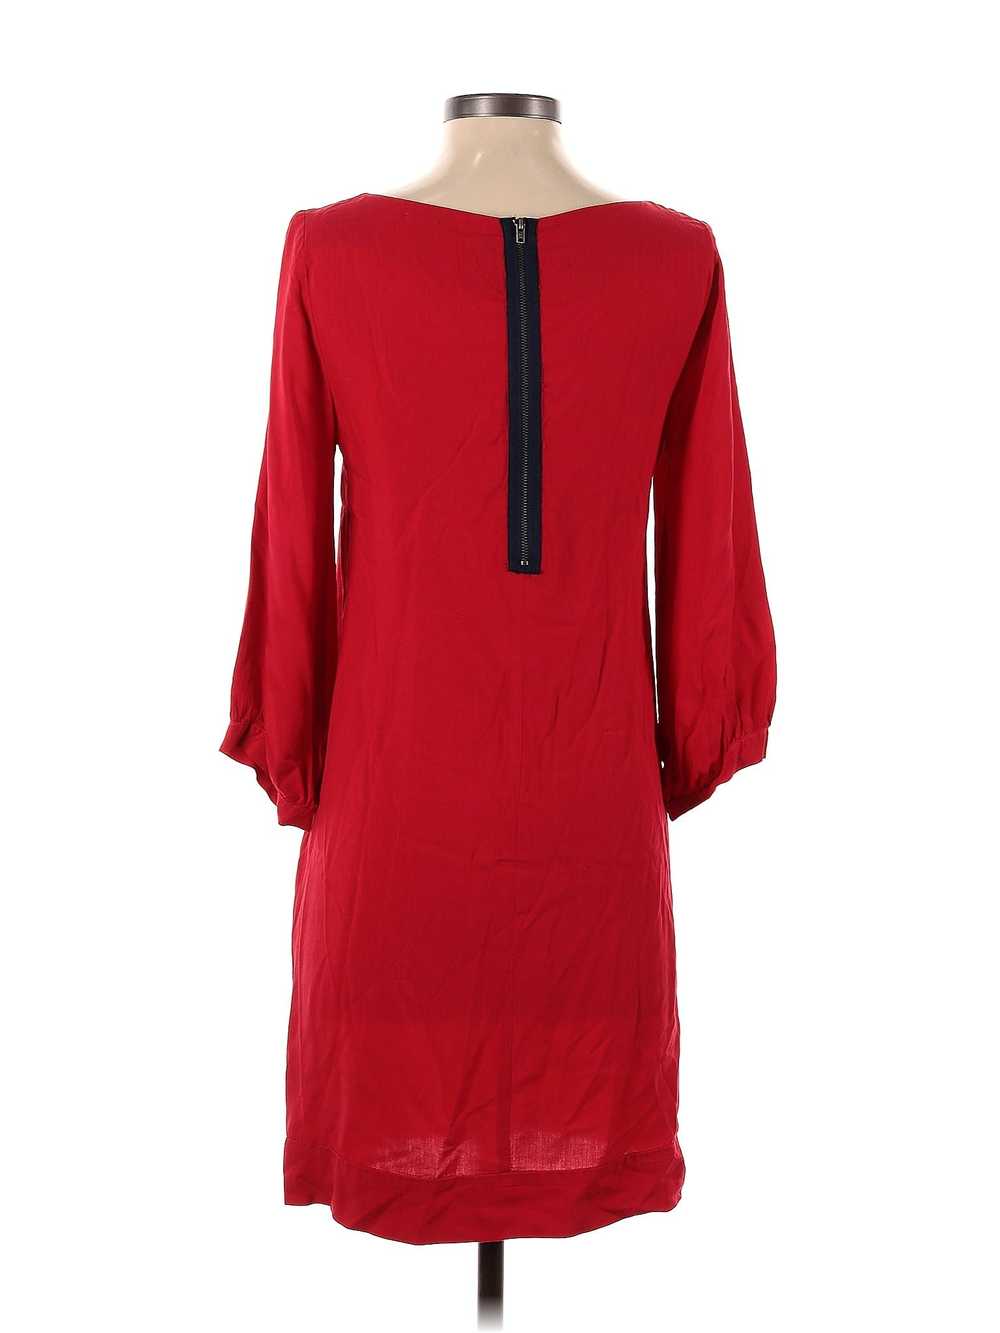 Splendid Women Red Casual Dress S - image 2